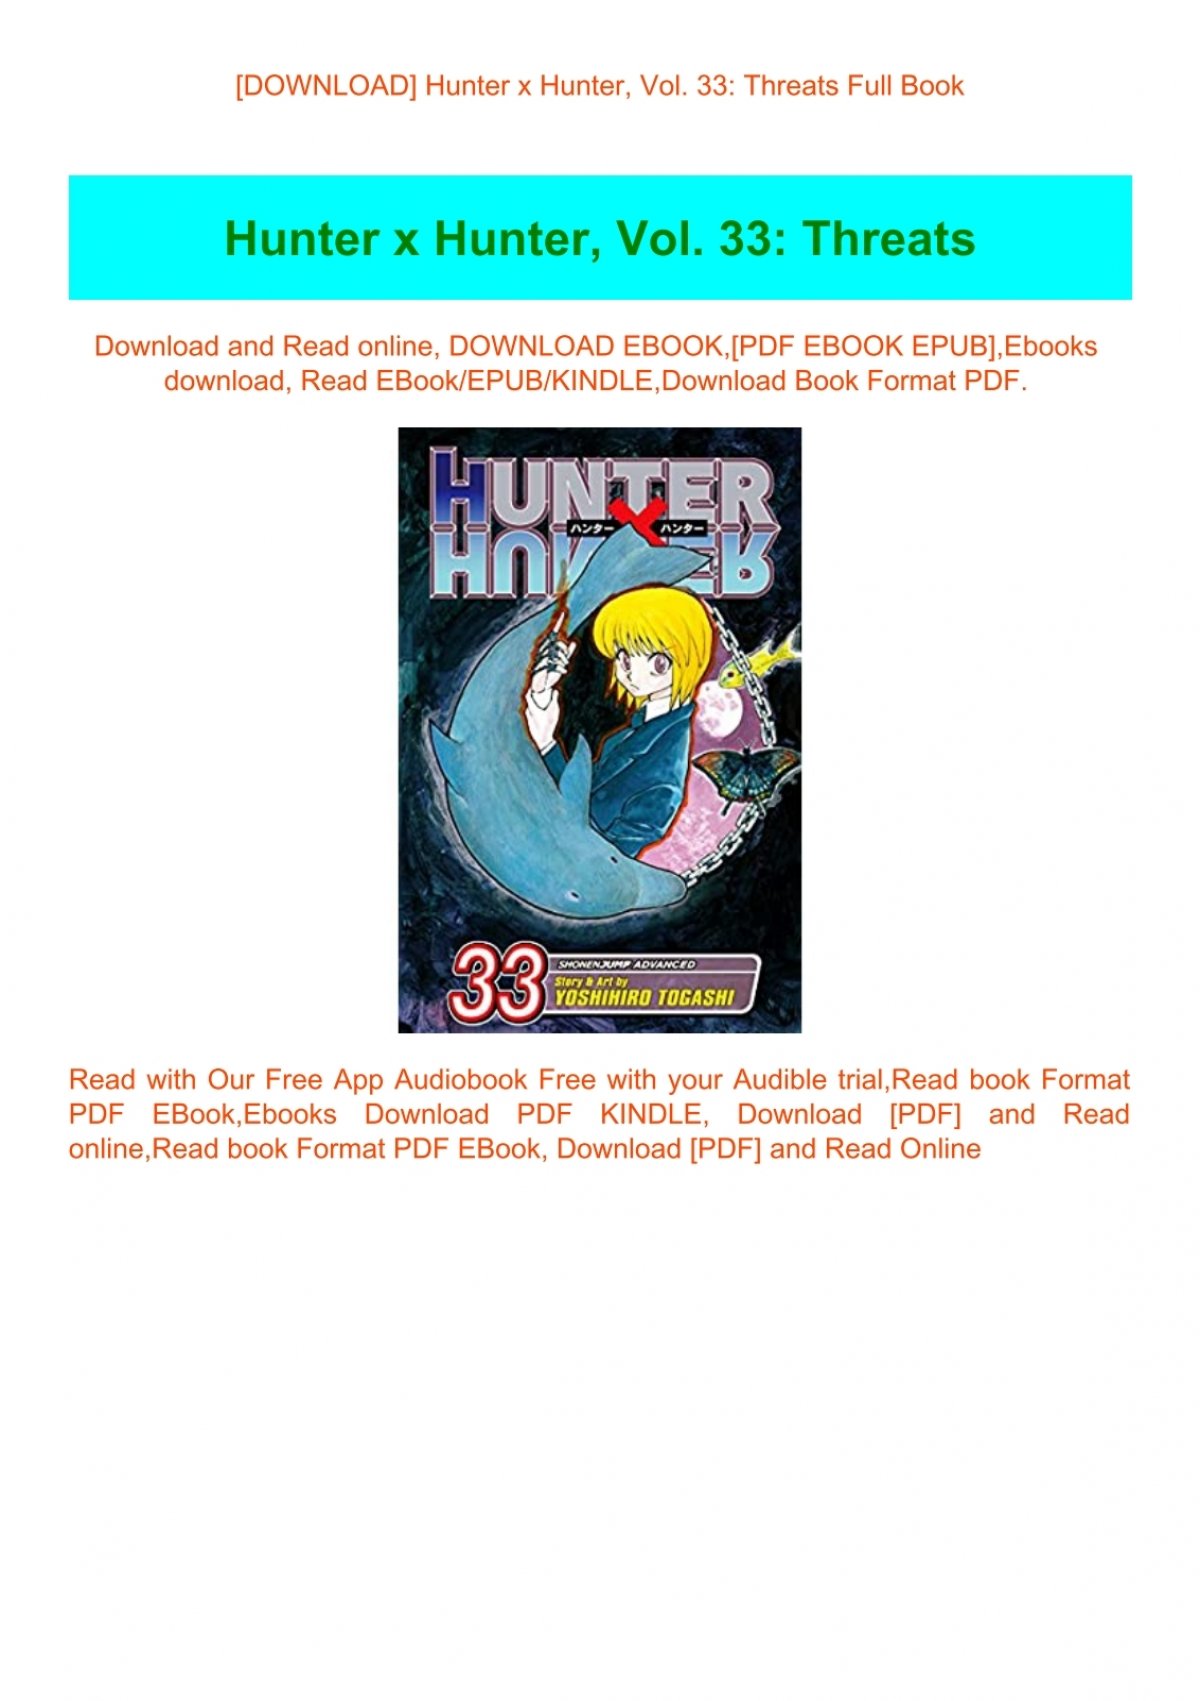 Download Hunter X Hunter Vol 33 Threats Full Book